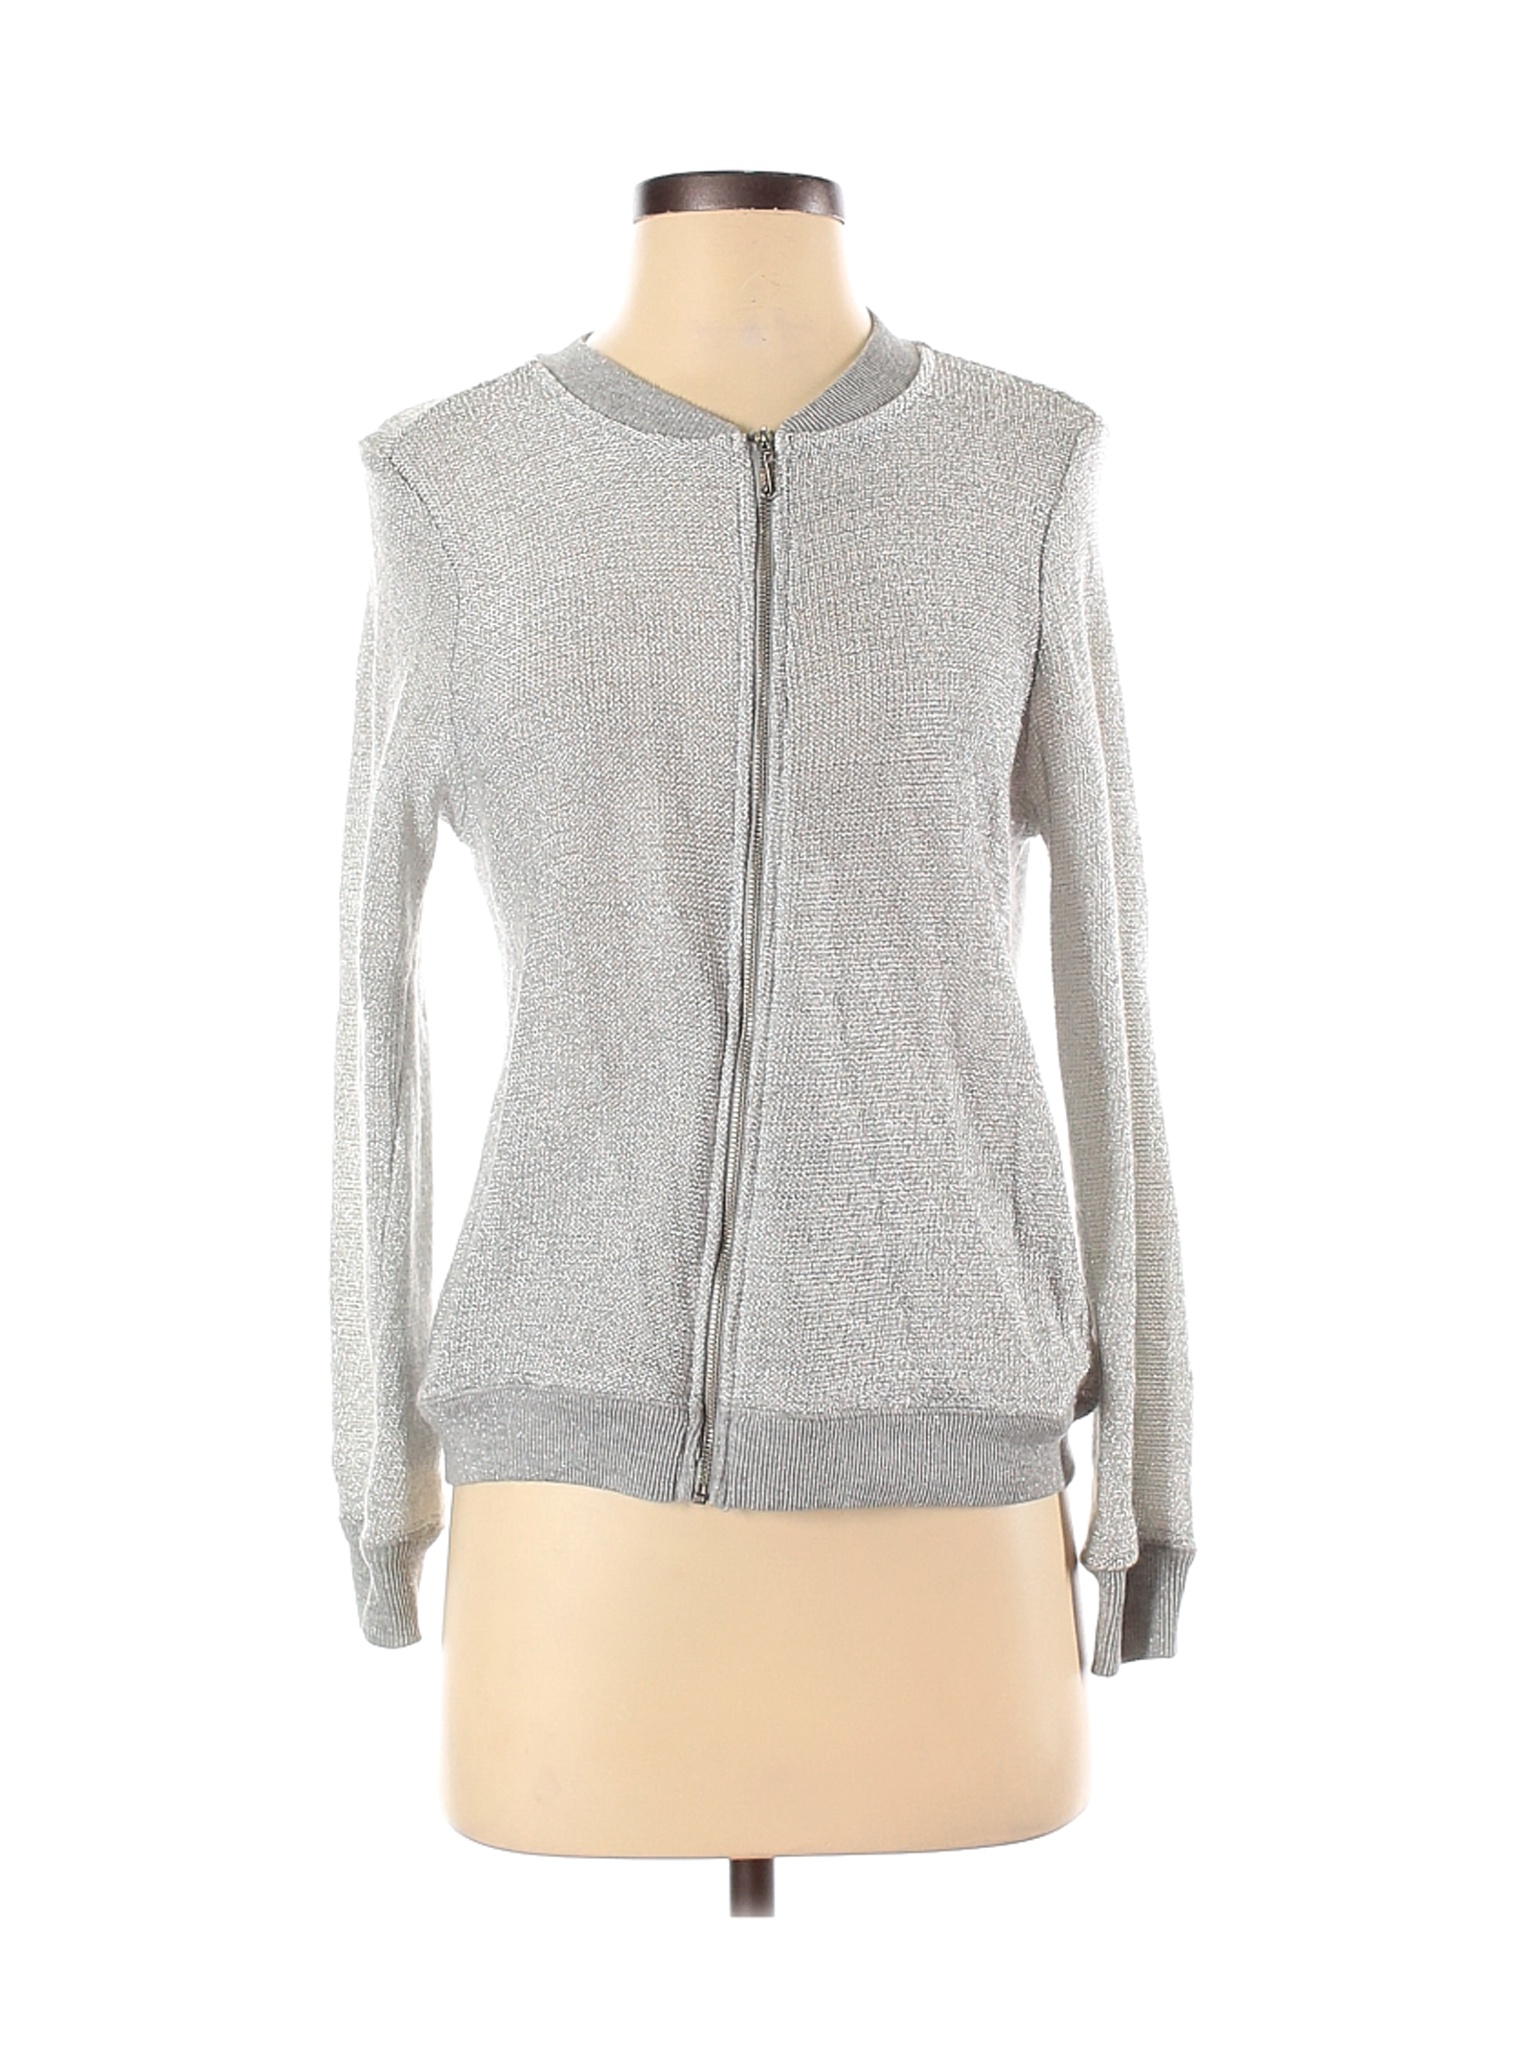 Juicy Couture Women Gray Jacket S | eBay